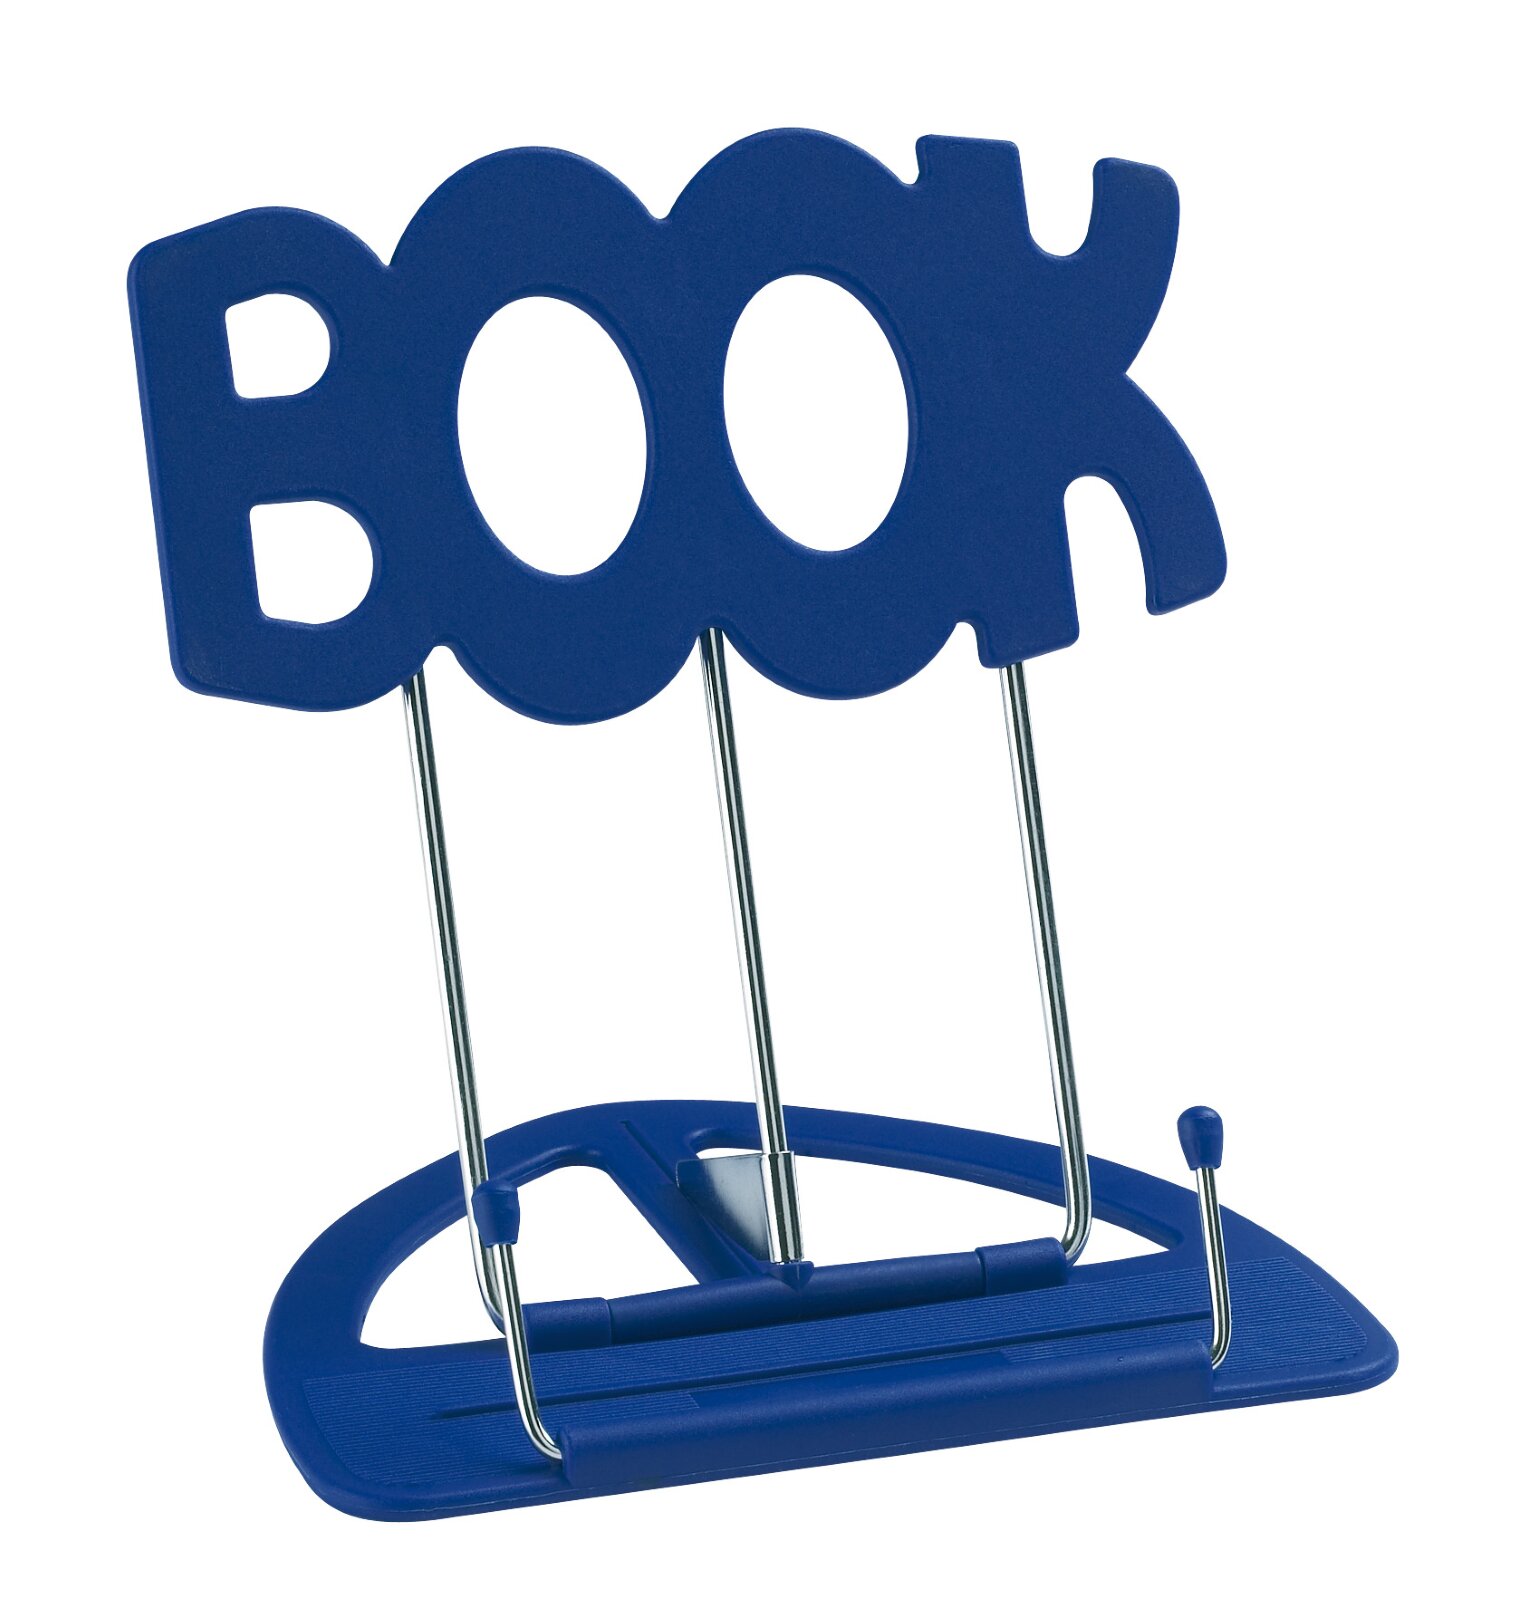 K & M 12440 Uni Boy Book table lectern blue : photo 1